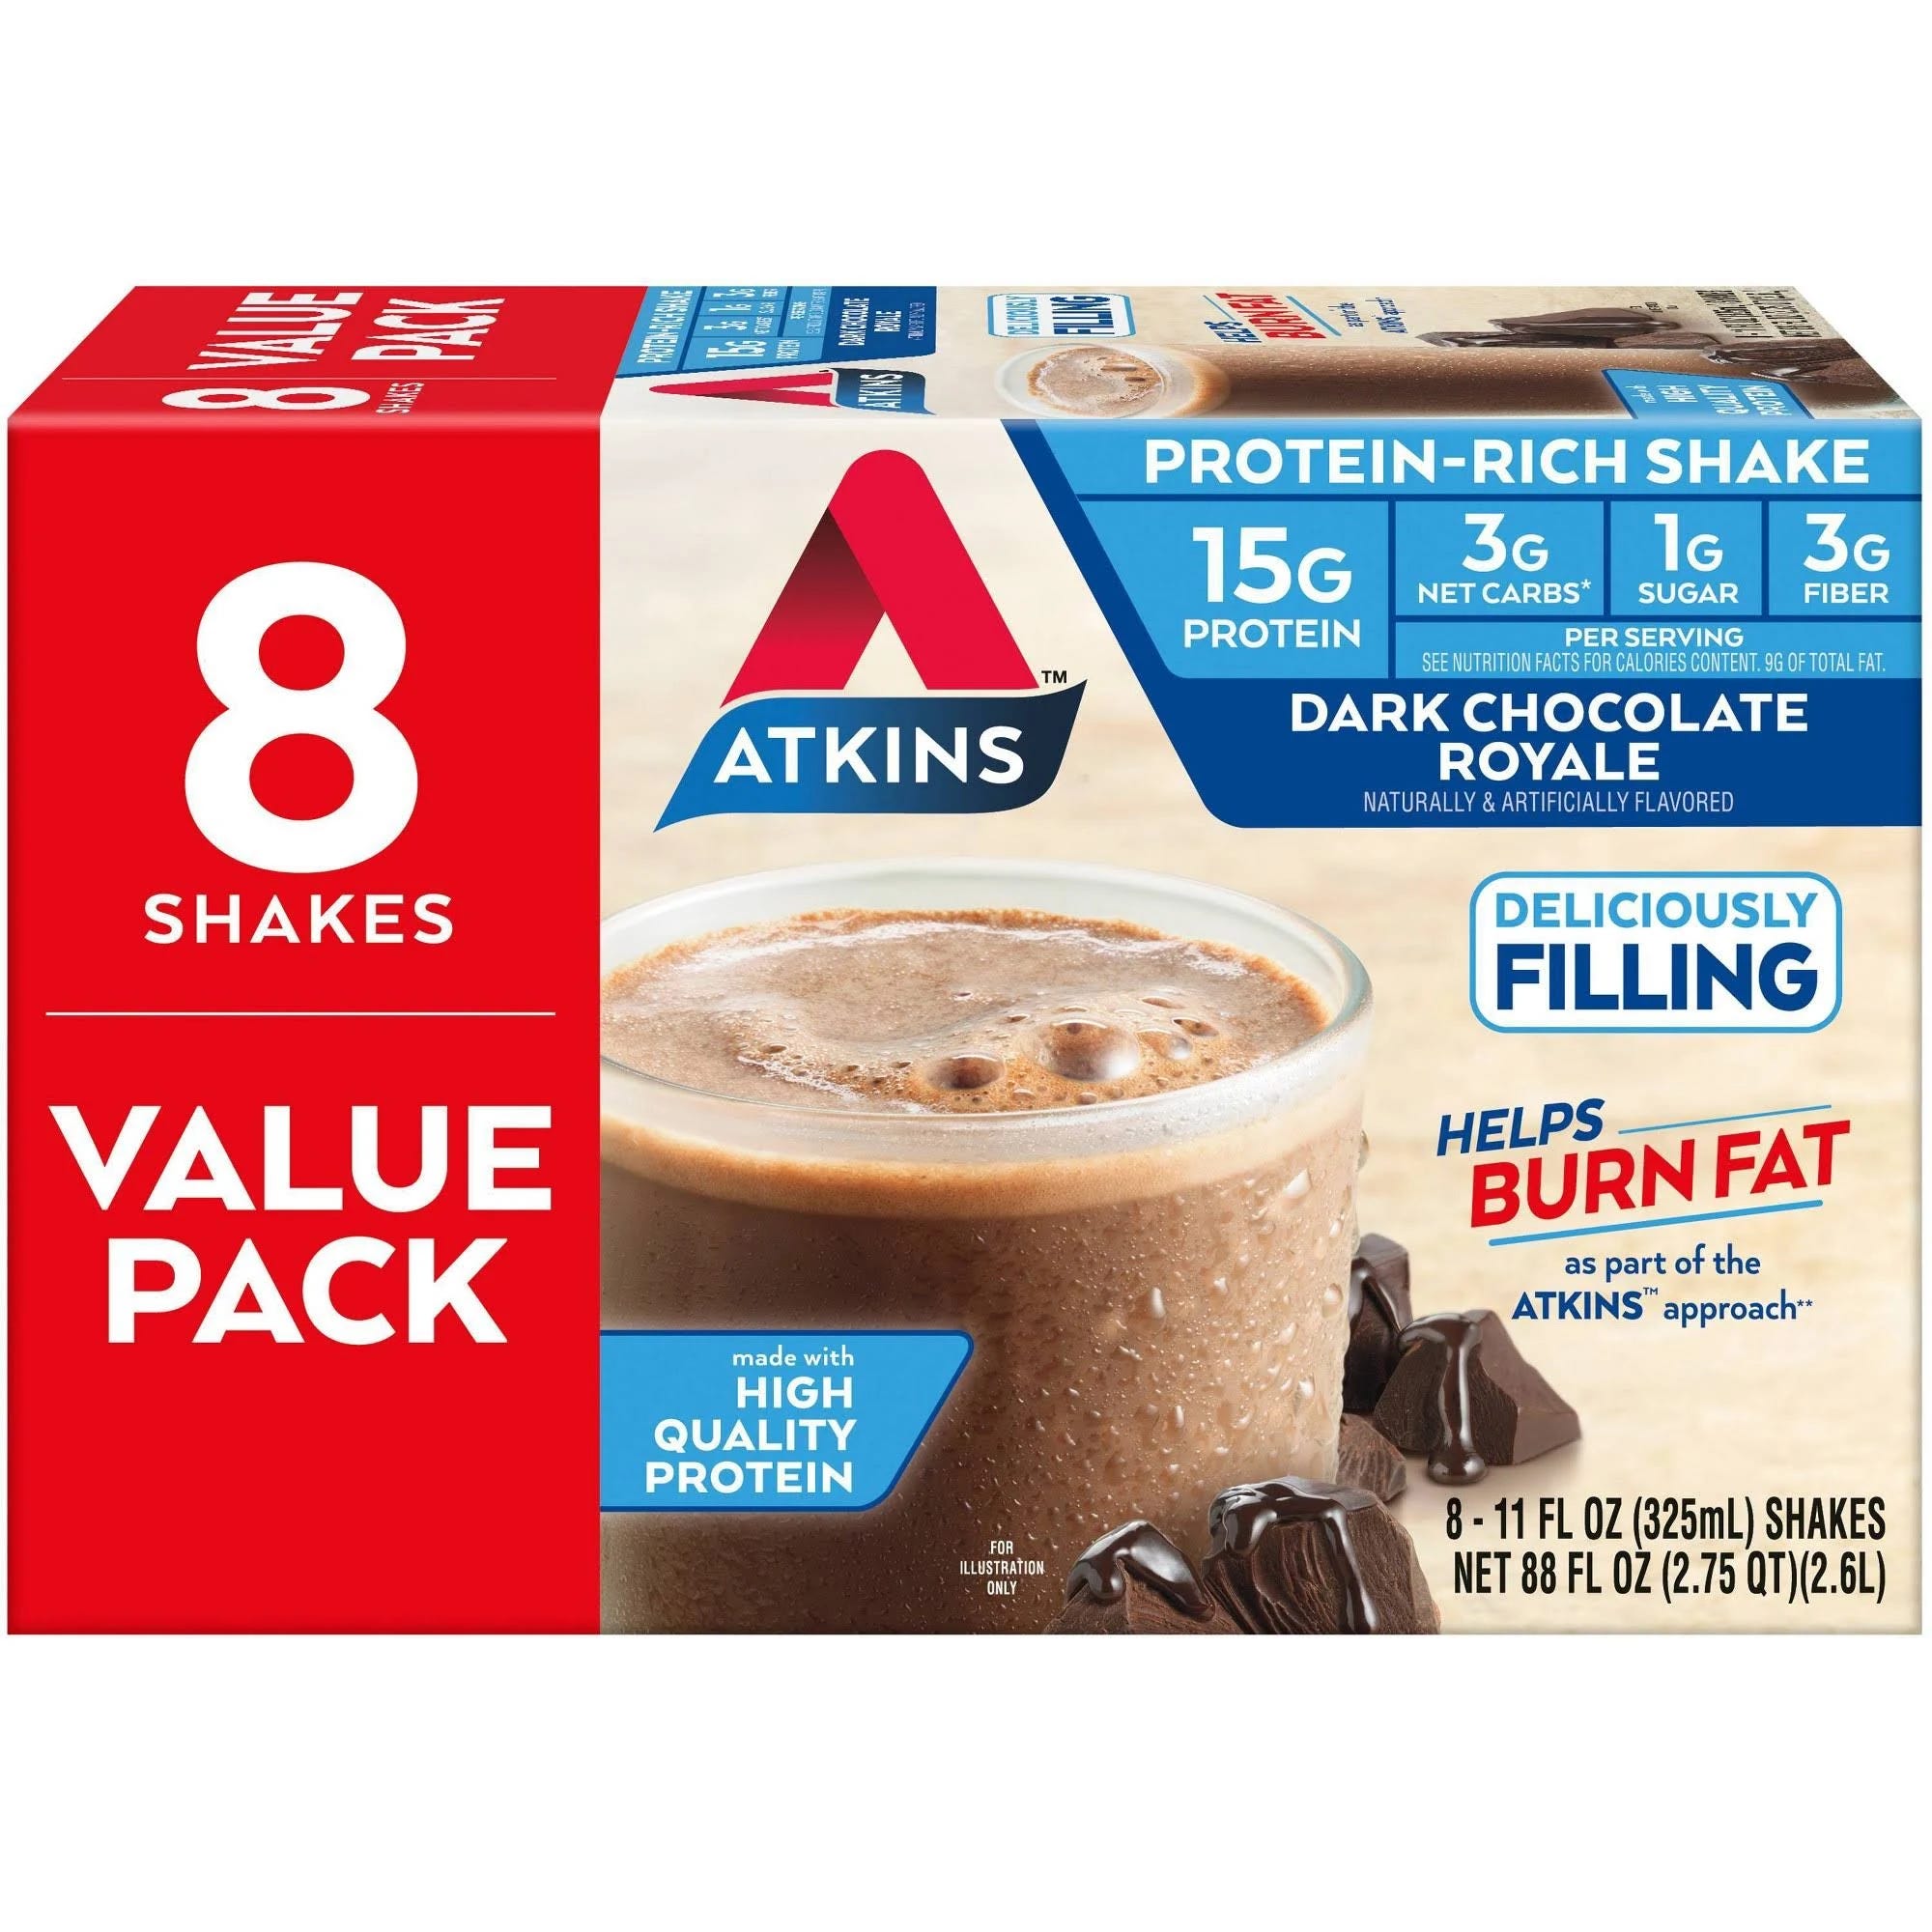 Dark Chocolate Royale Atkins High Protein Shake | Image